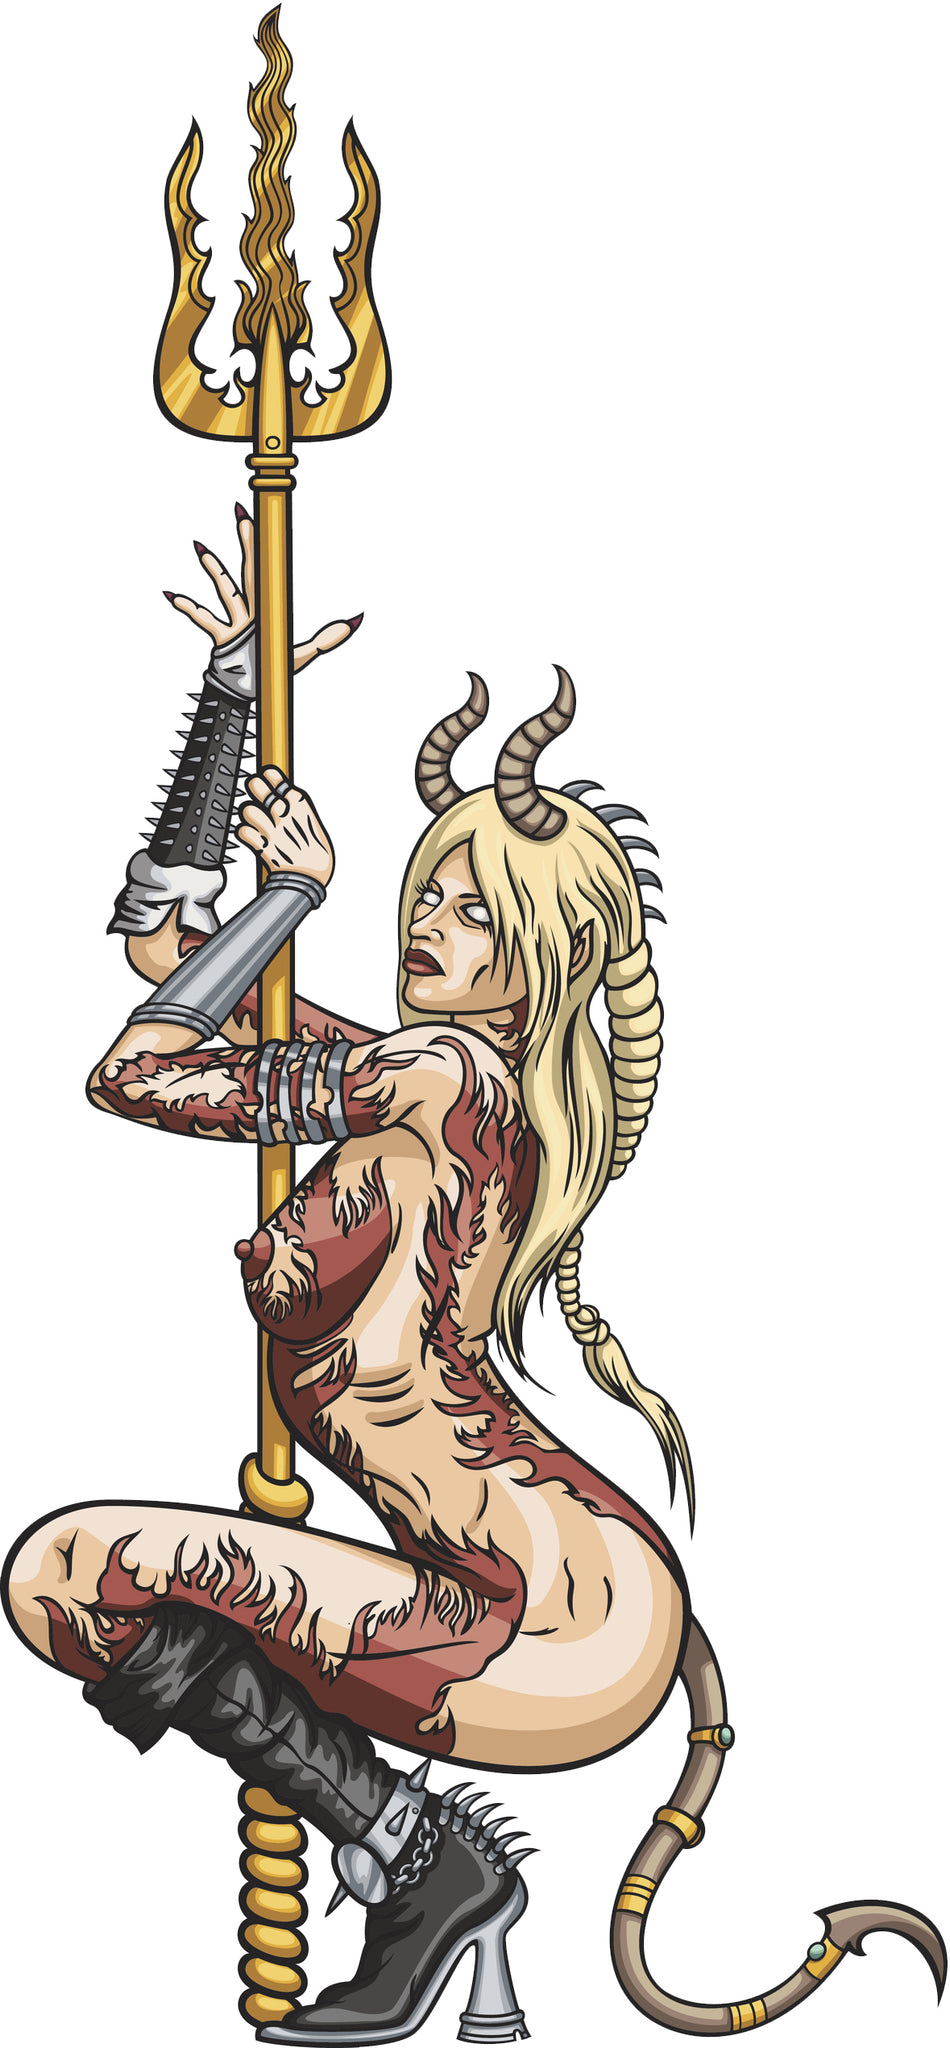 Creepy Sexy Devil Goat Woman with Golden Trident Cartoon Vinyl Decal Sticker